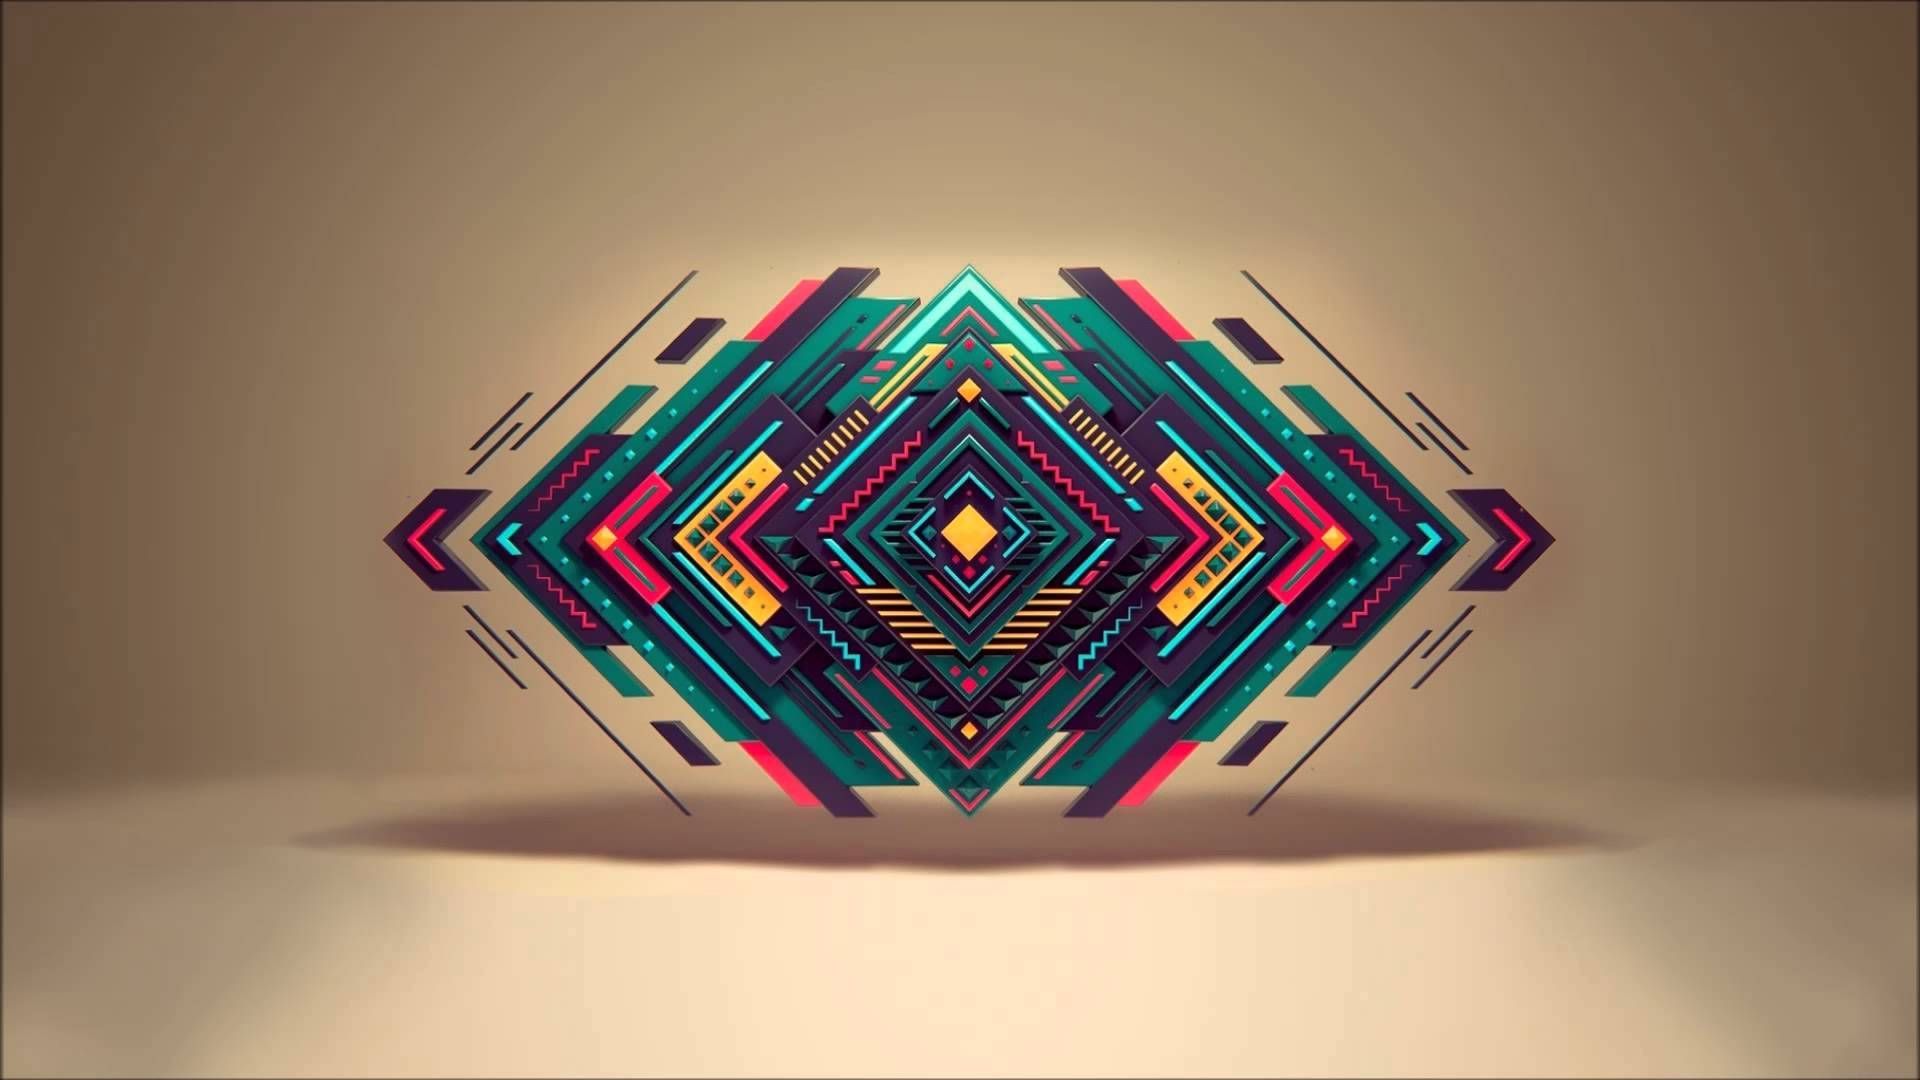 YouTube thumbnail grabber. Geometric shapes wallpaper, Abstract